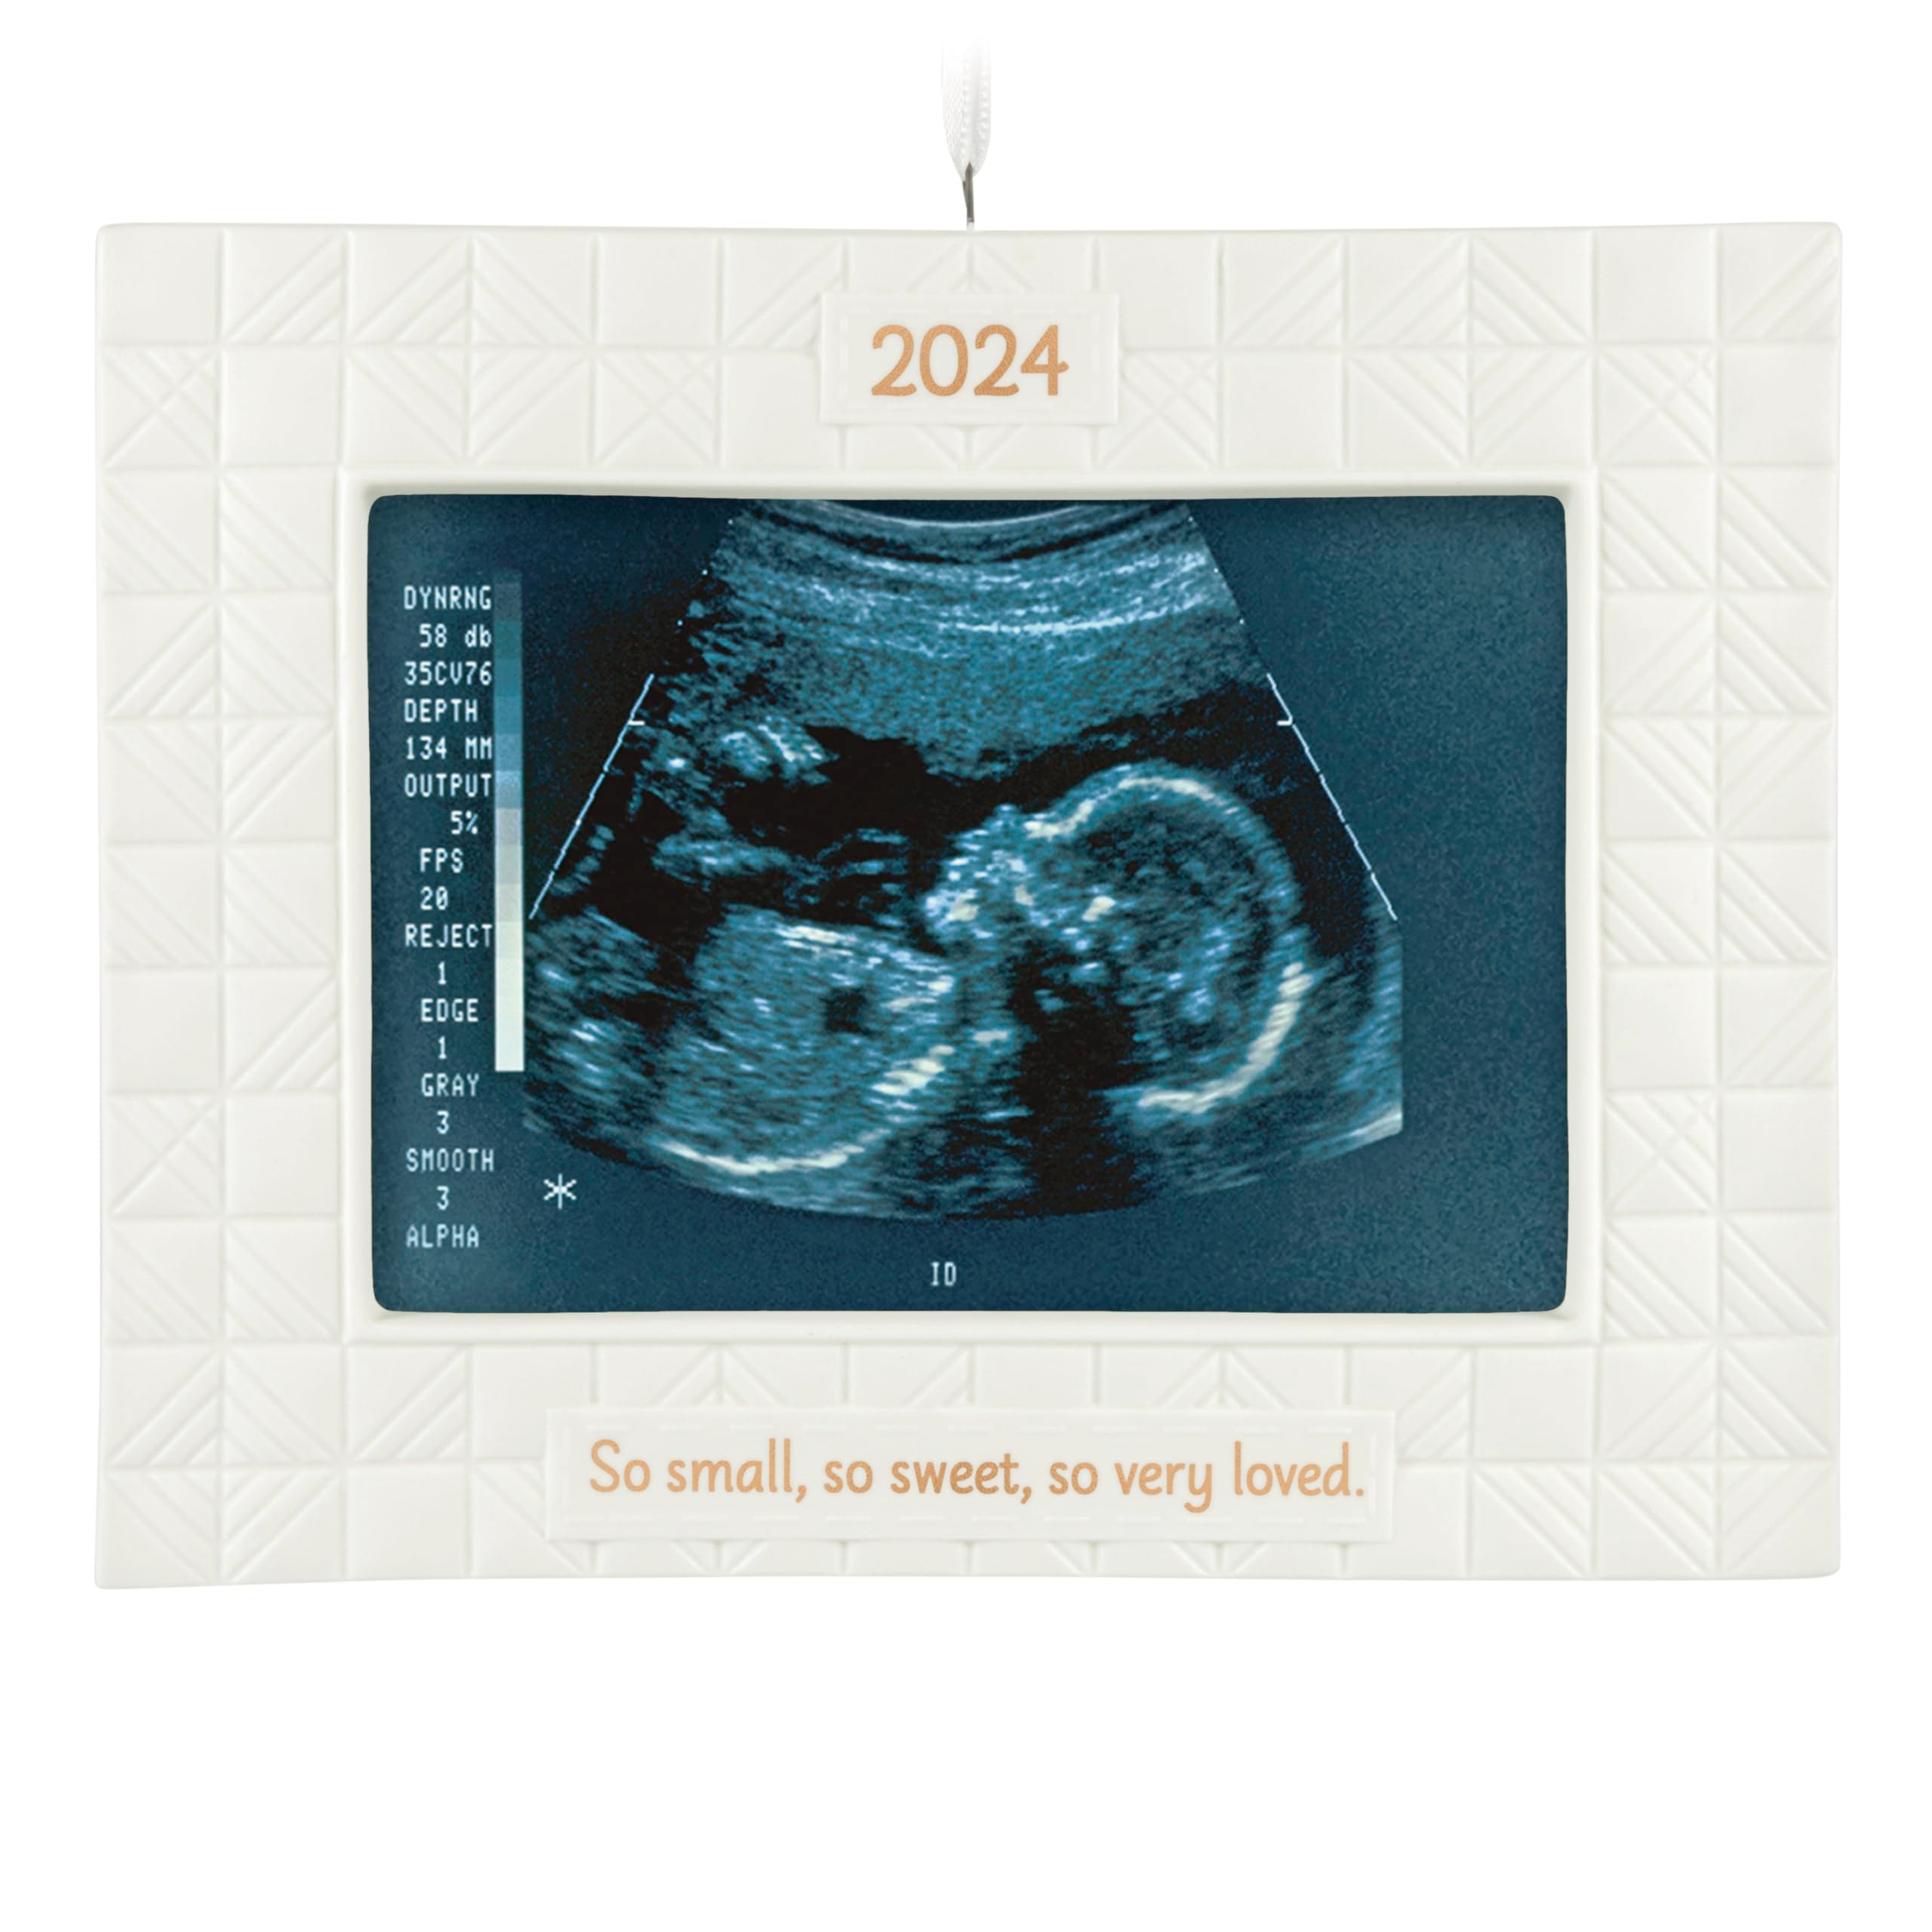 Hallmark Keepsake Christmas Ornament 2024, So Very Loved Sonogram Photo Frame, Porcelain, Baby's 1st Christmas